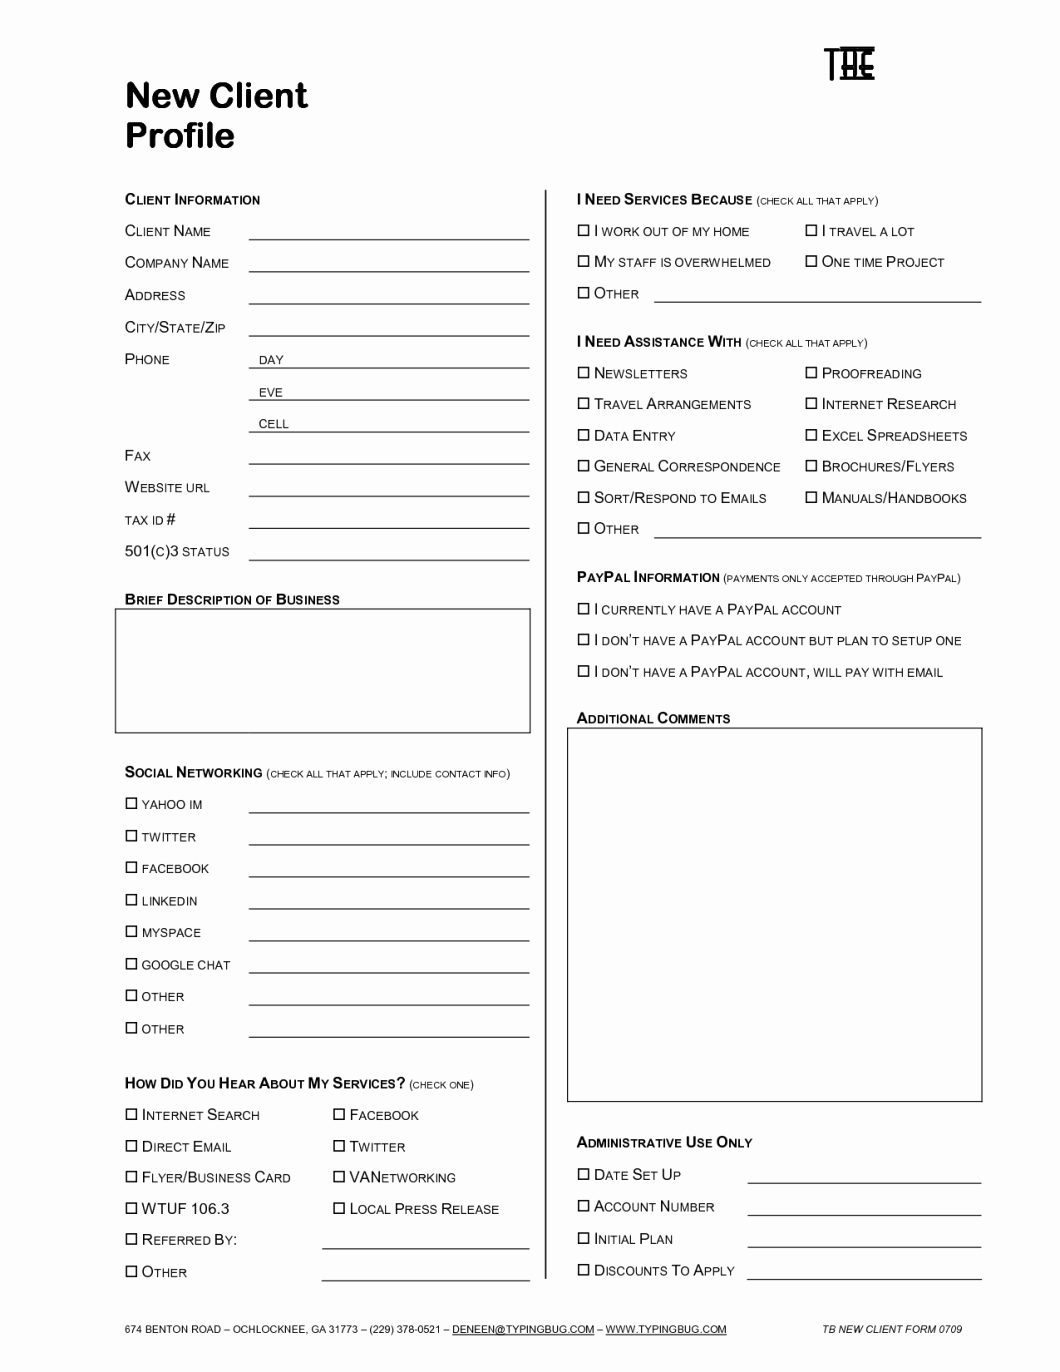 New Client form Template Inspirational Interior Design Client Profile form